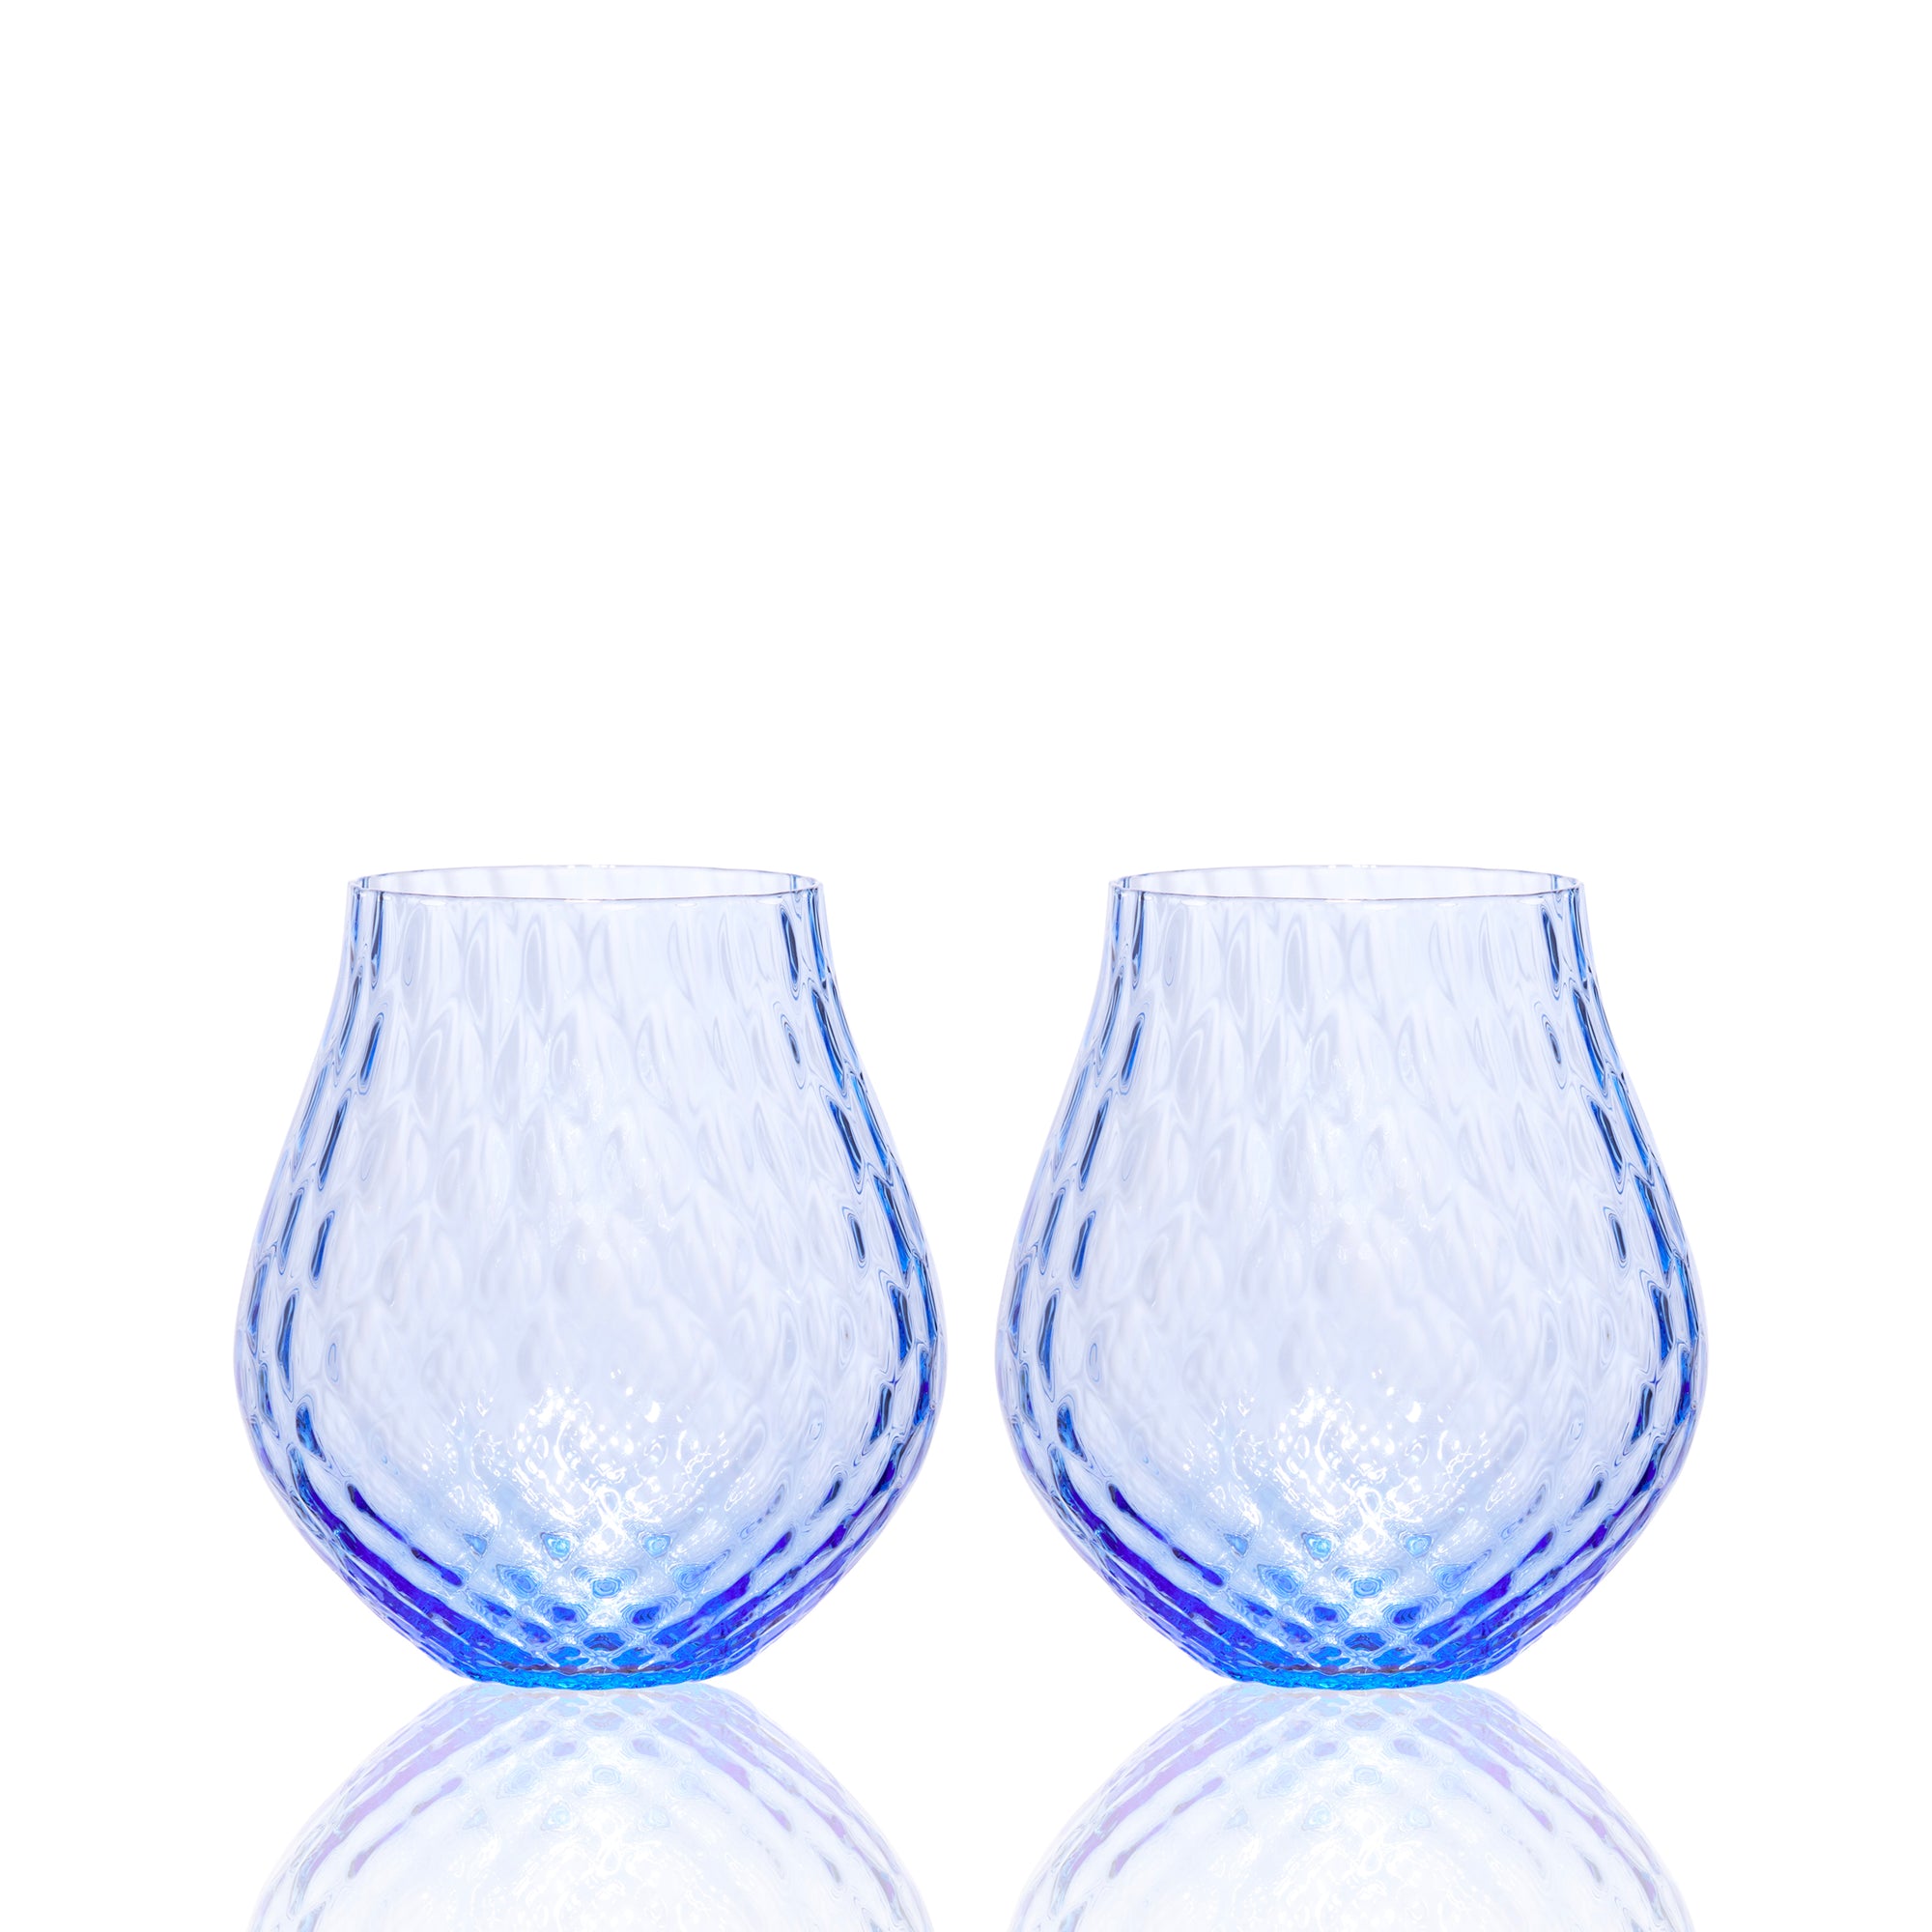 Phoebe cobal stemless tulip crystal wine glasses from Caskata.